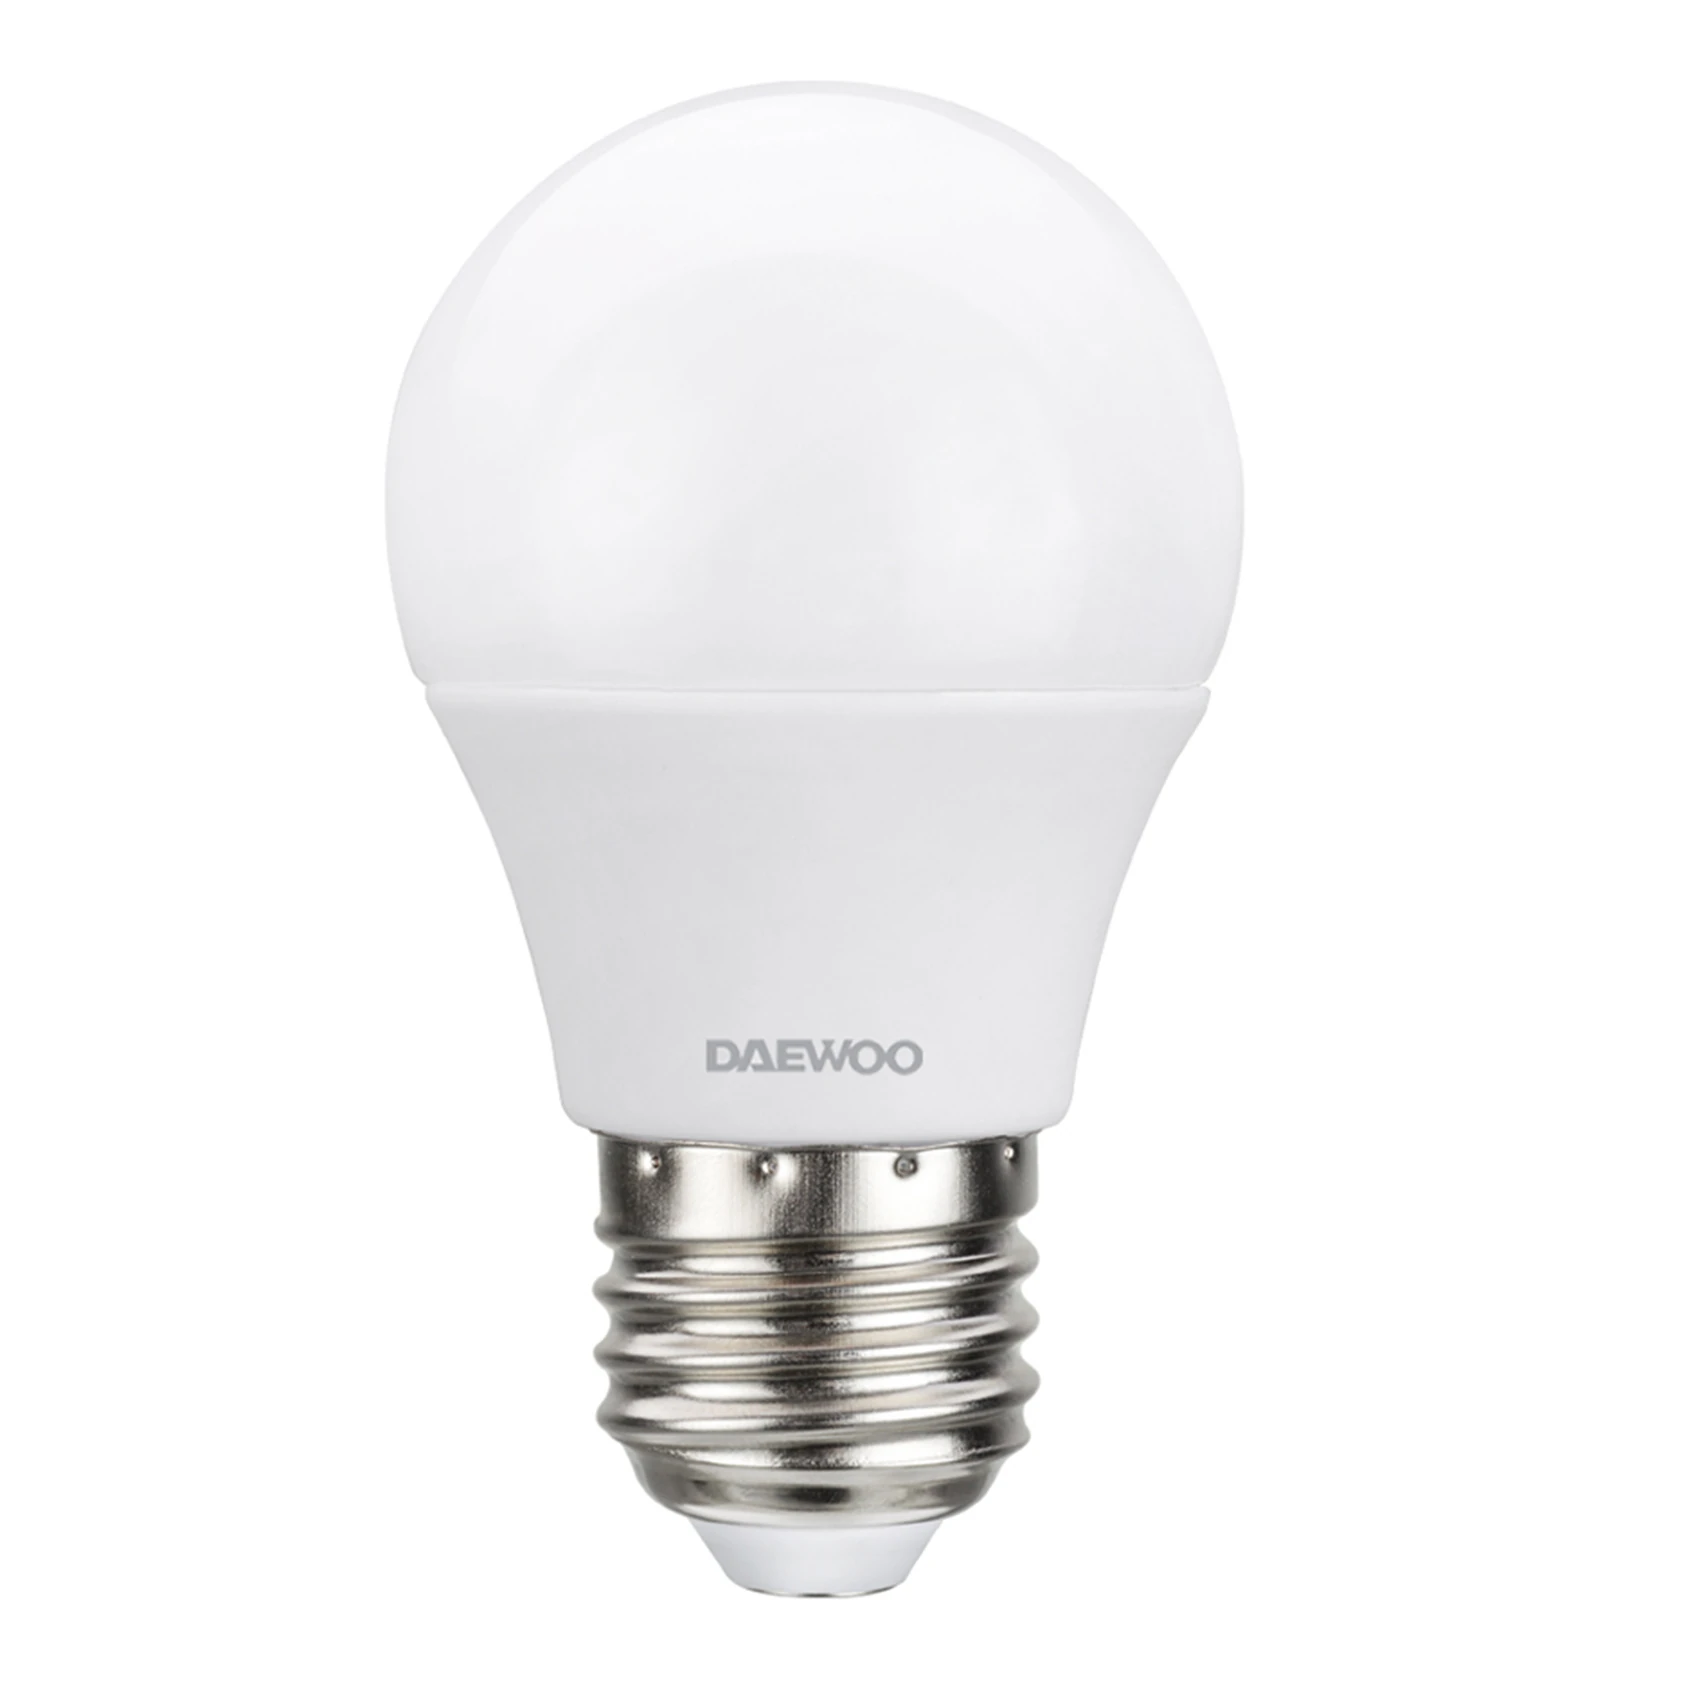 DAEWOO ENERGY SAVING LED BULB E27-5W DL2705CN DAY LIGHT